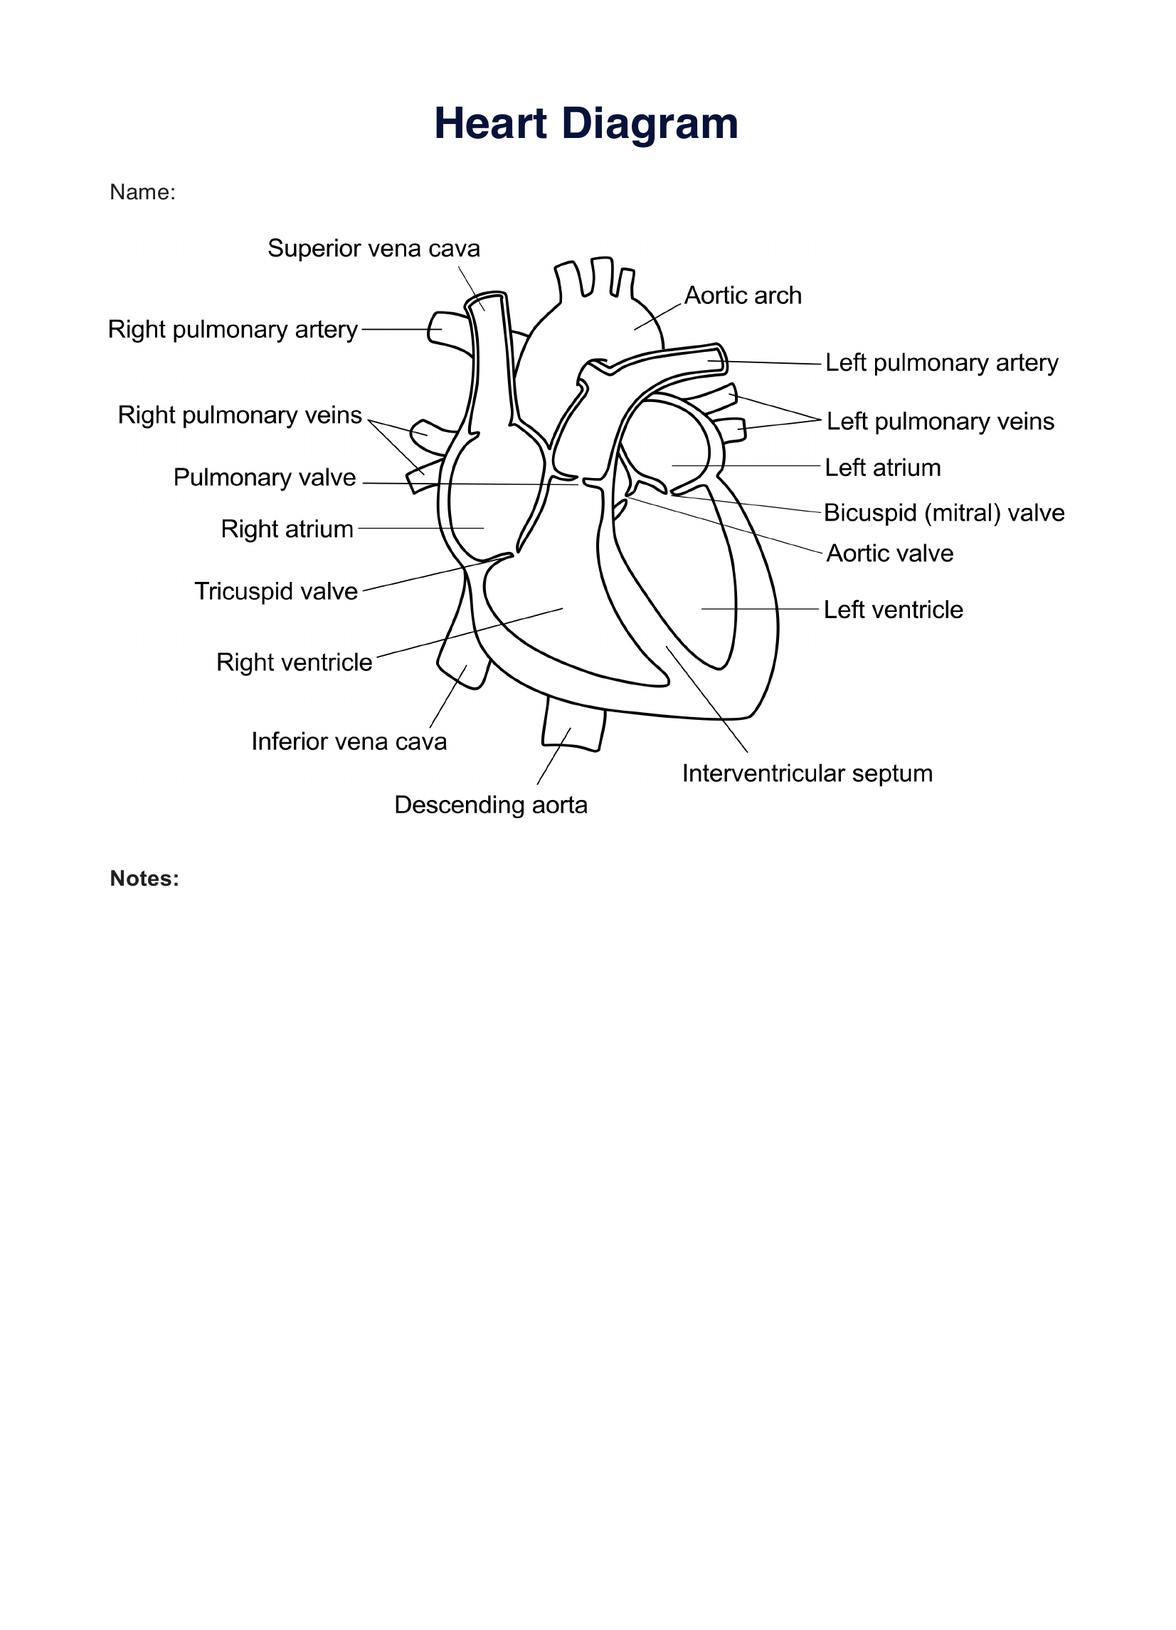 Heart Diagram PDF Example